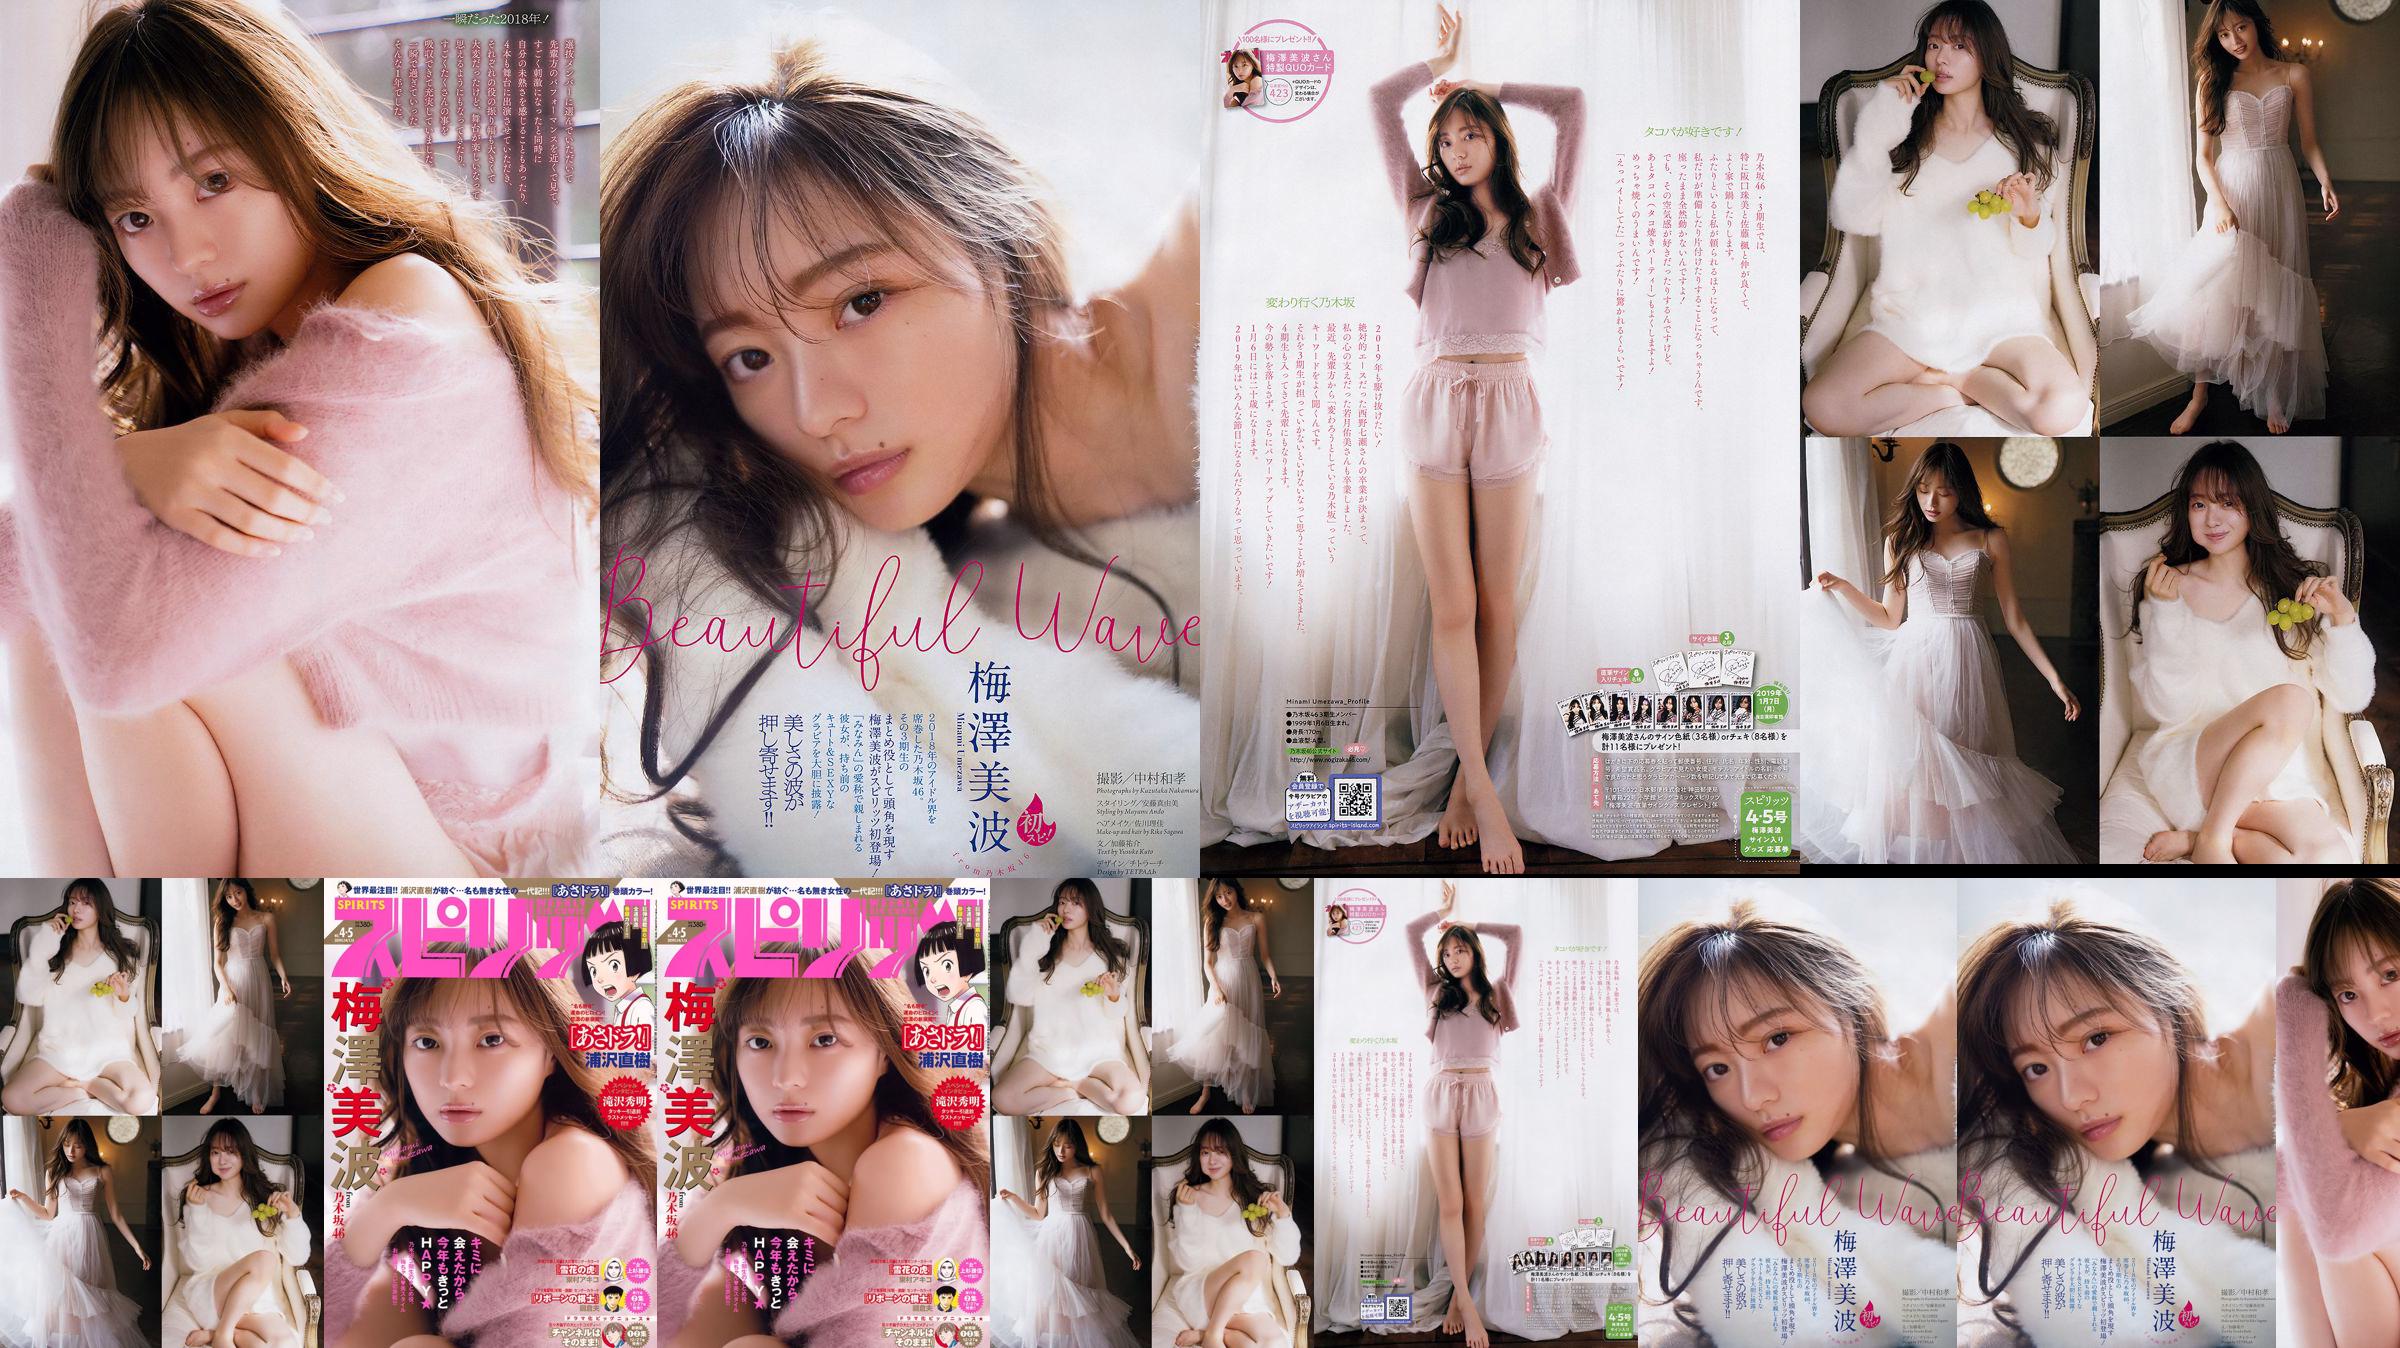 [Grands esprits de la bande dessinée hebdomadaire] Minami Umezawa 2019 N ° 04-05 Photo Magazine No.6867e8 Page 1